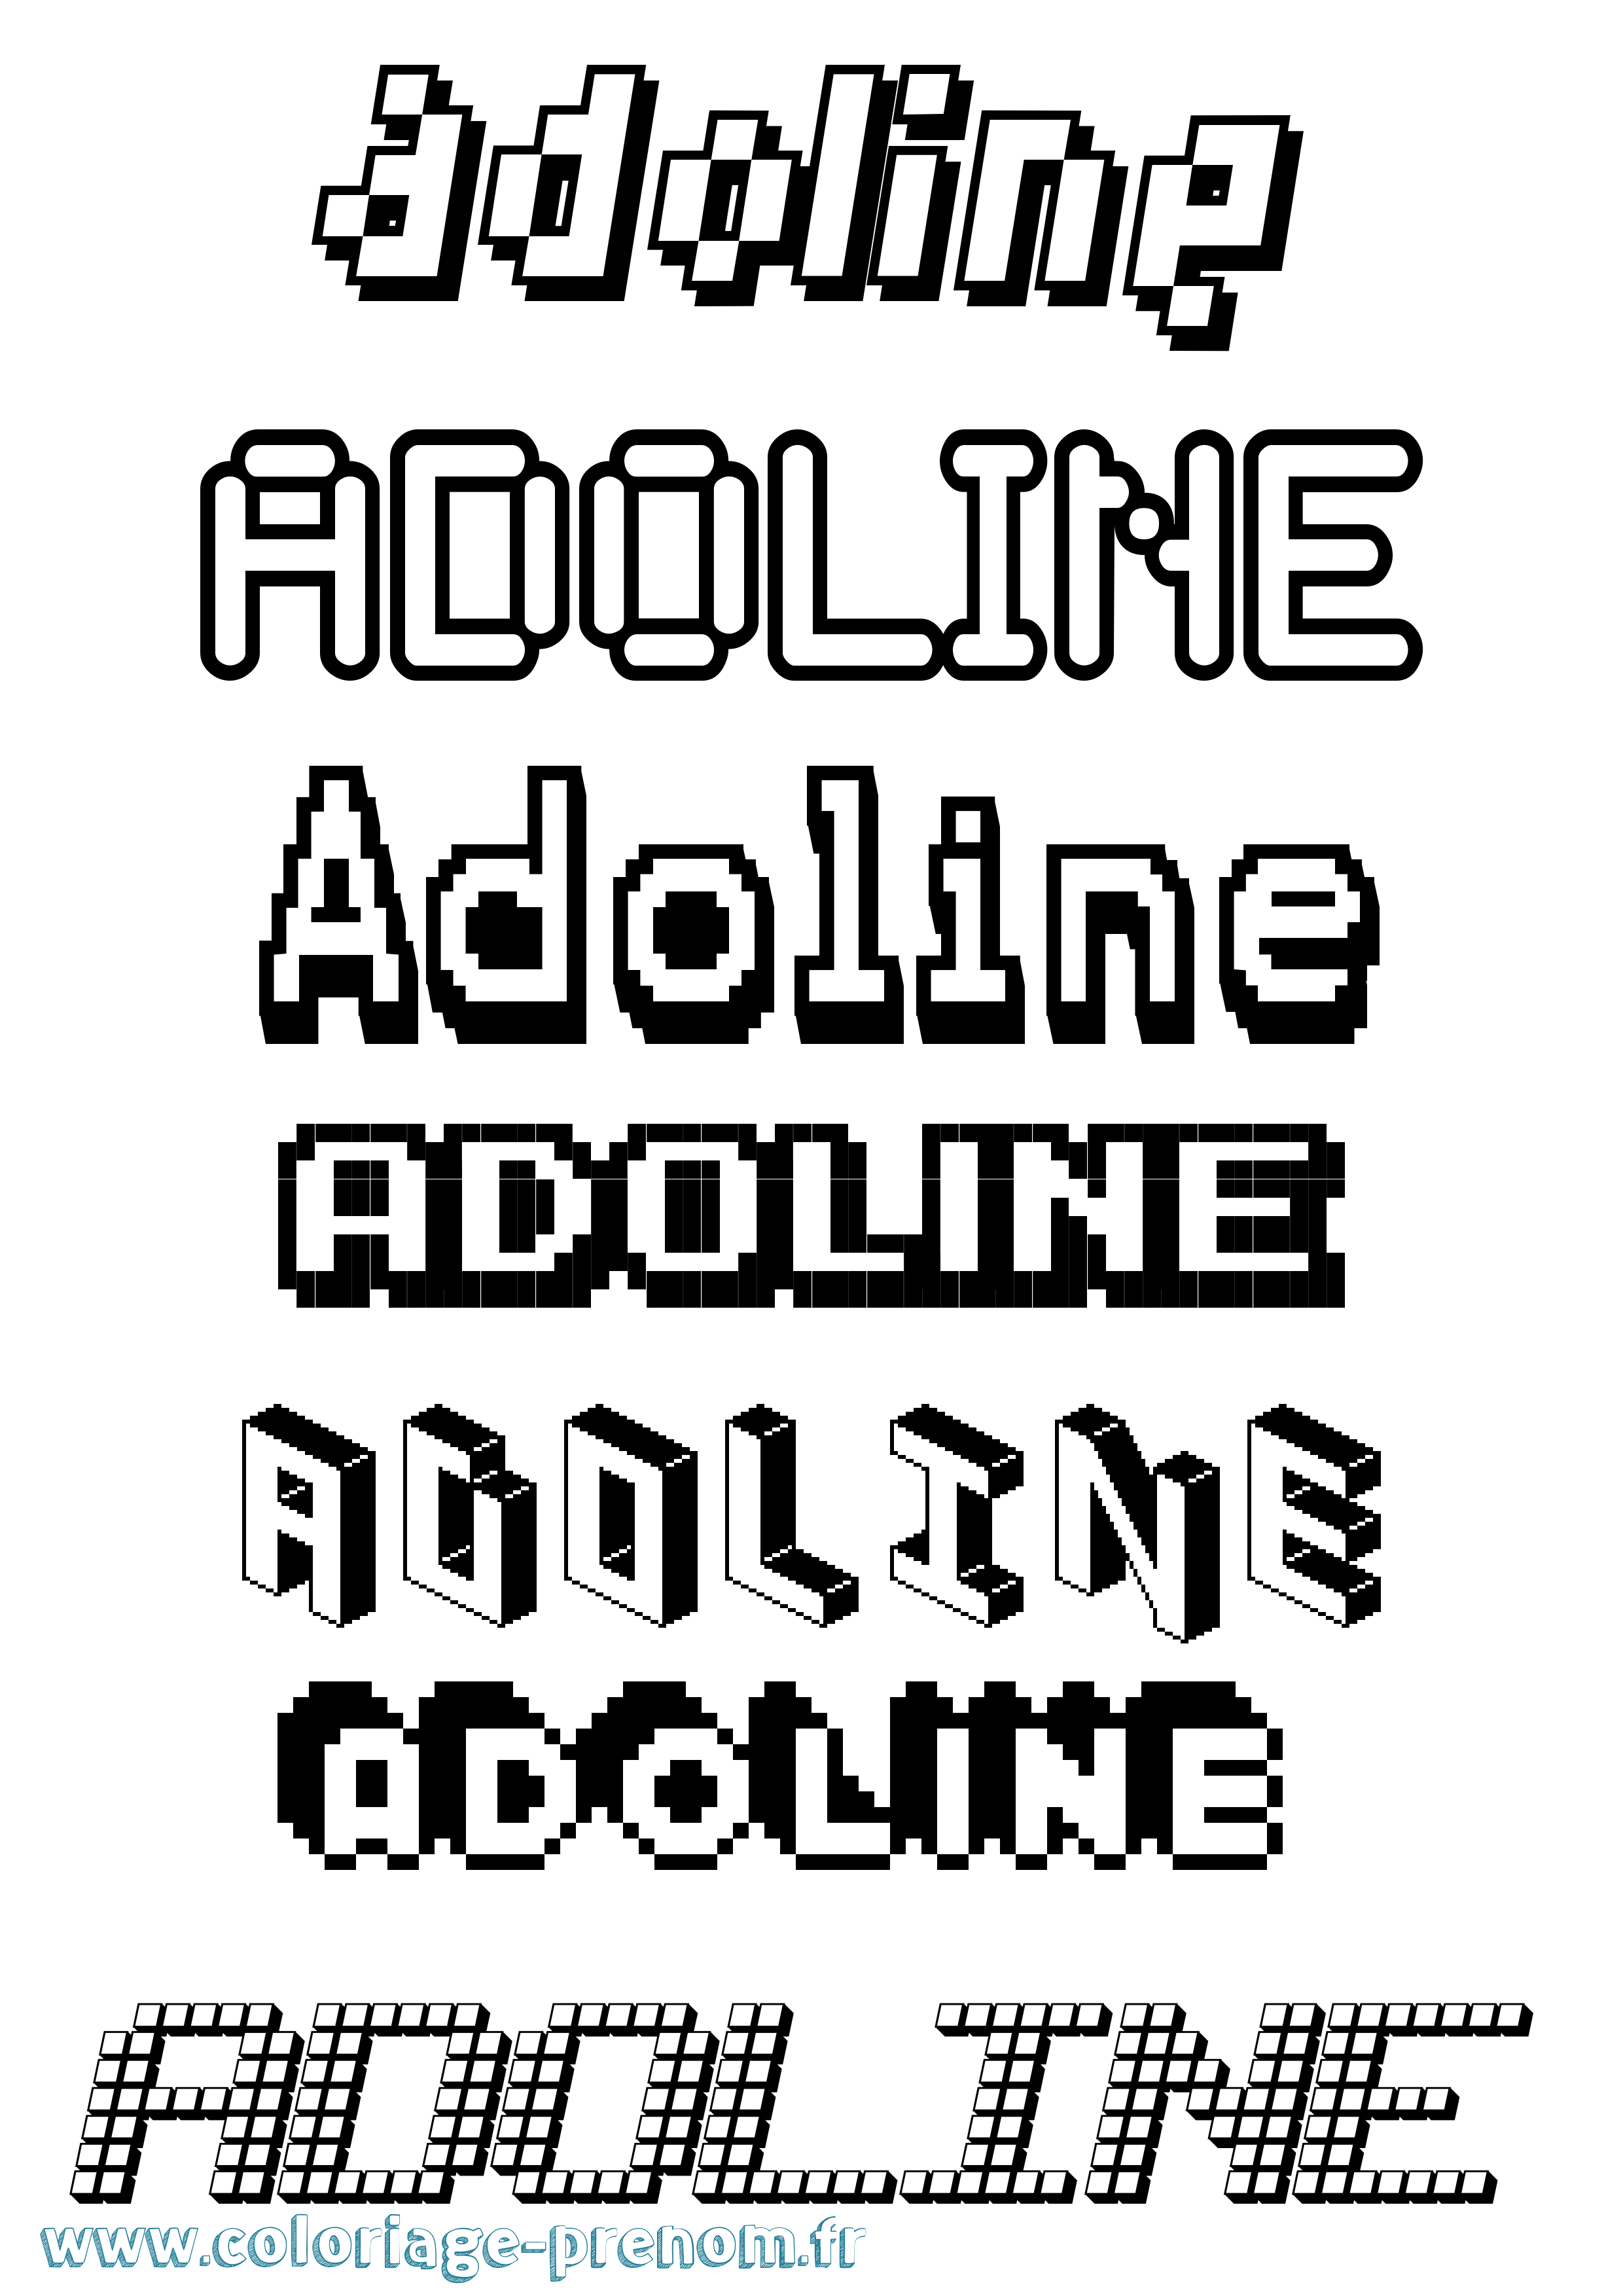 Coloriage prénom Adoline Pixel